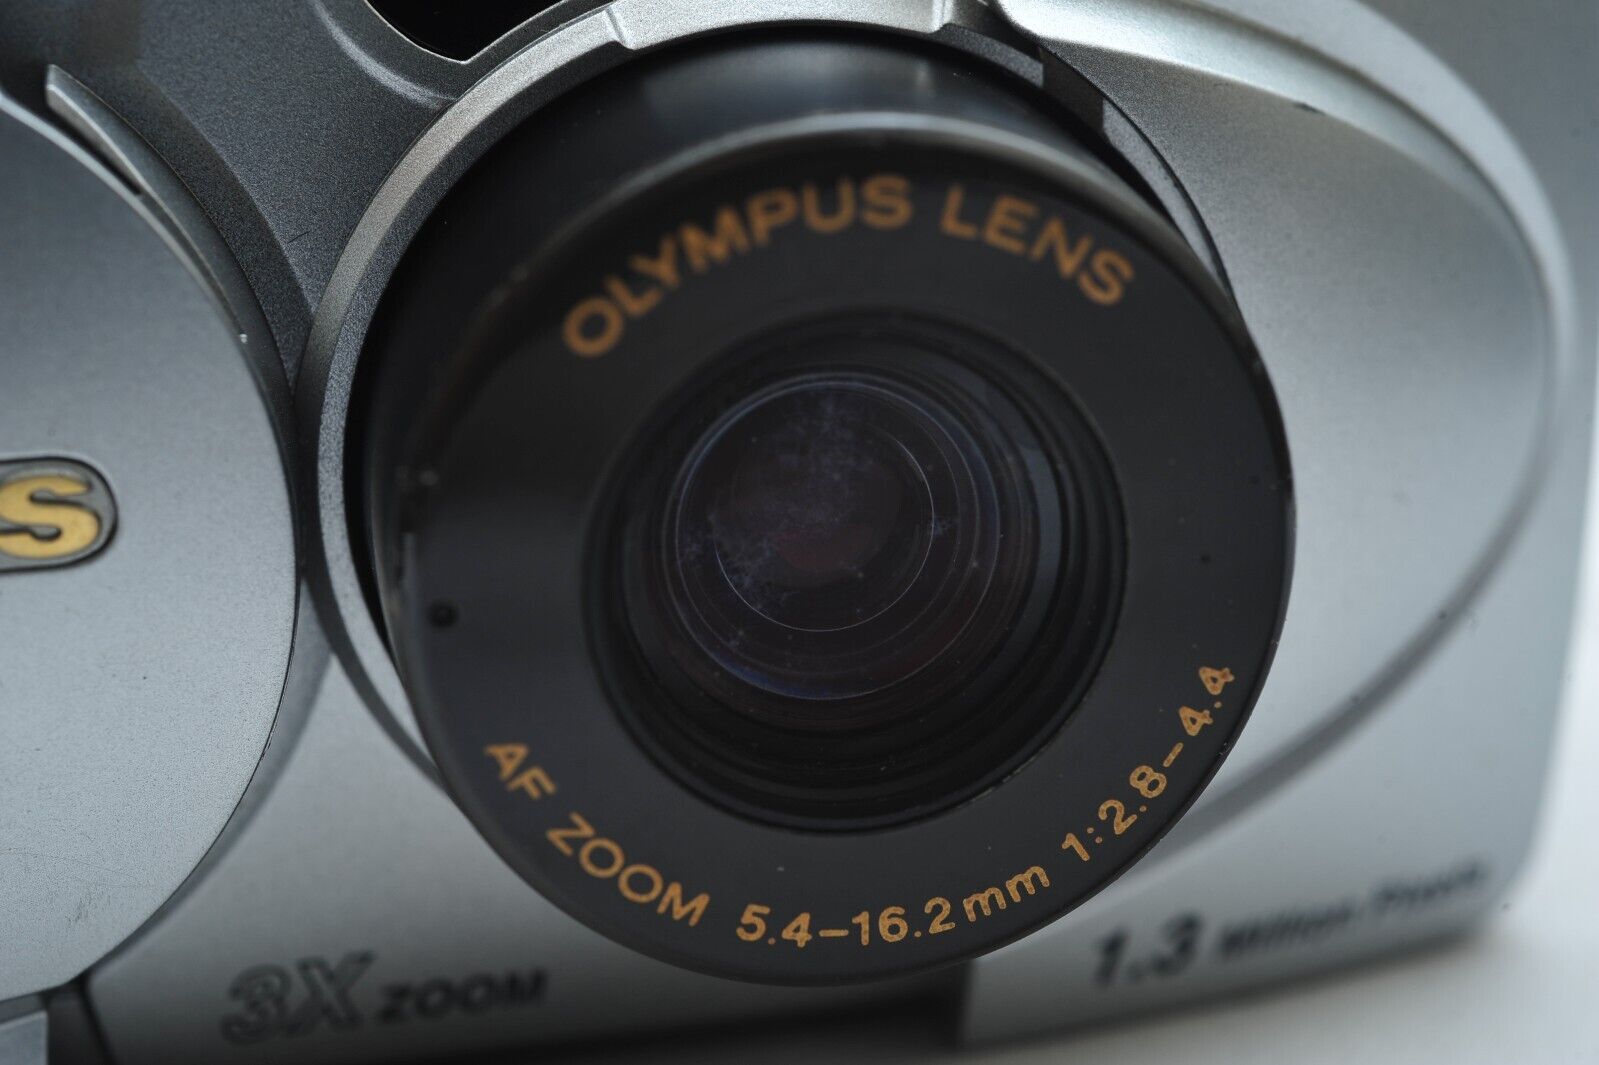 @ SakuraDo Camera @ Olympus Camedia C-900 Zoom 1.3MP AA-Battery Digital  Camera